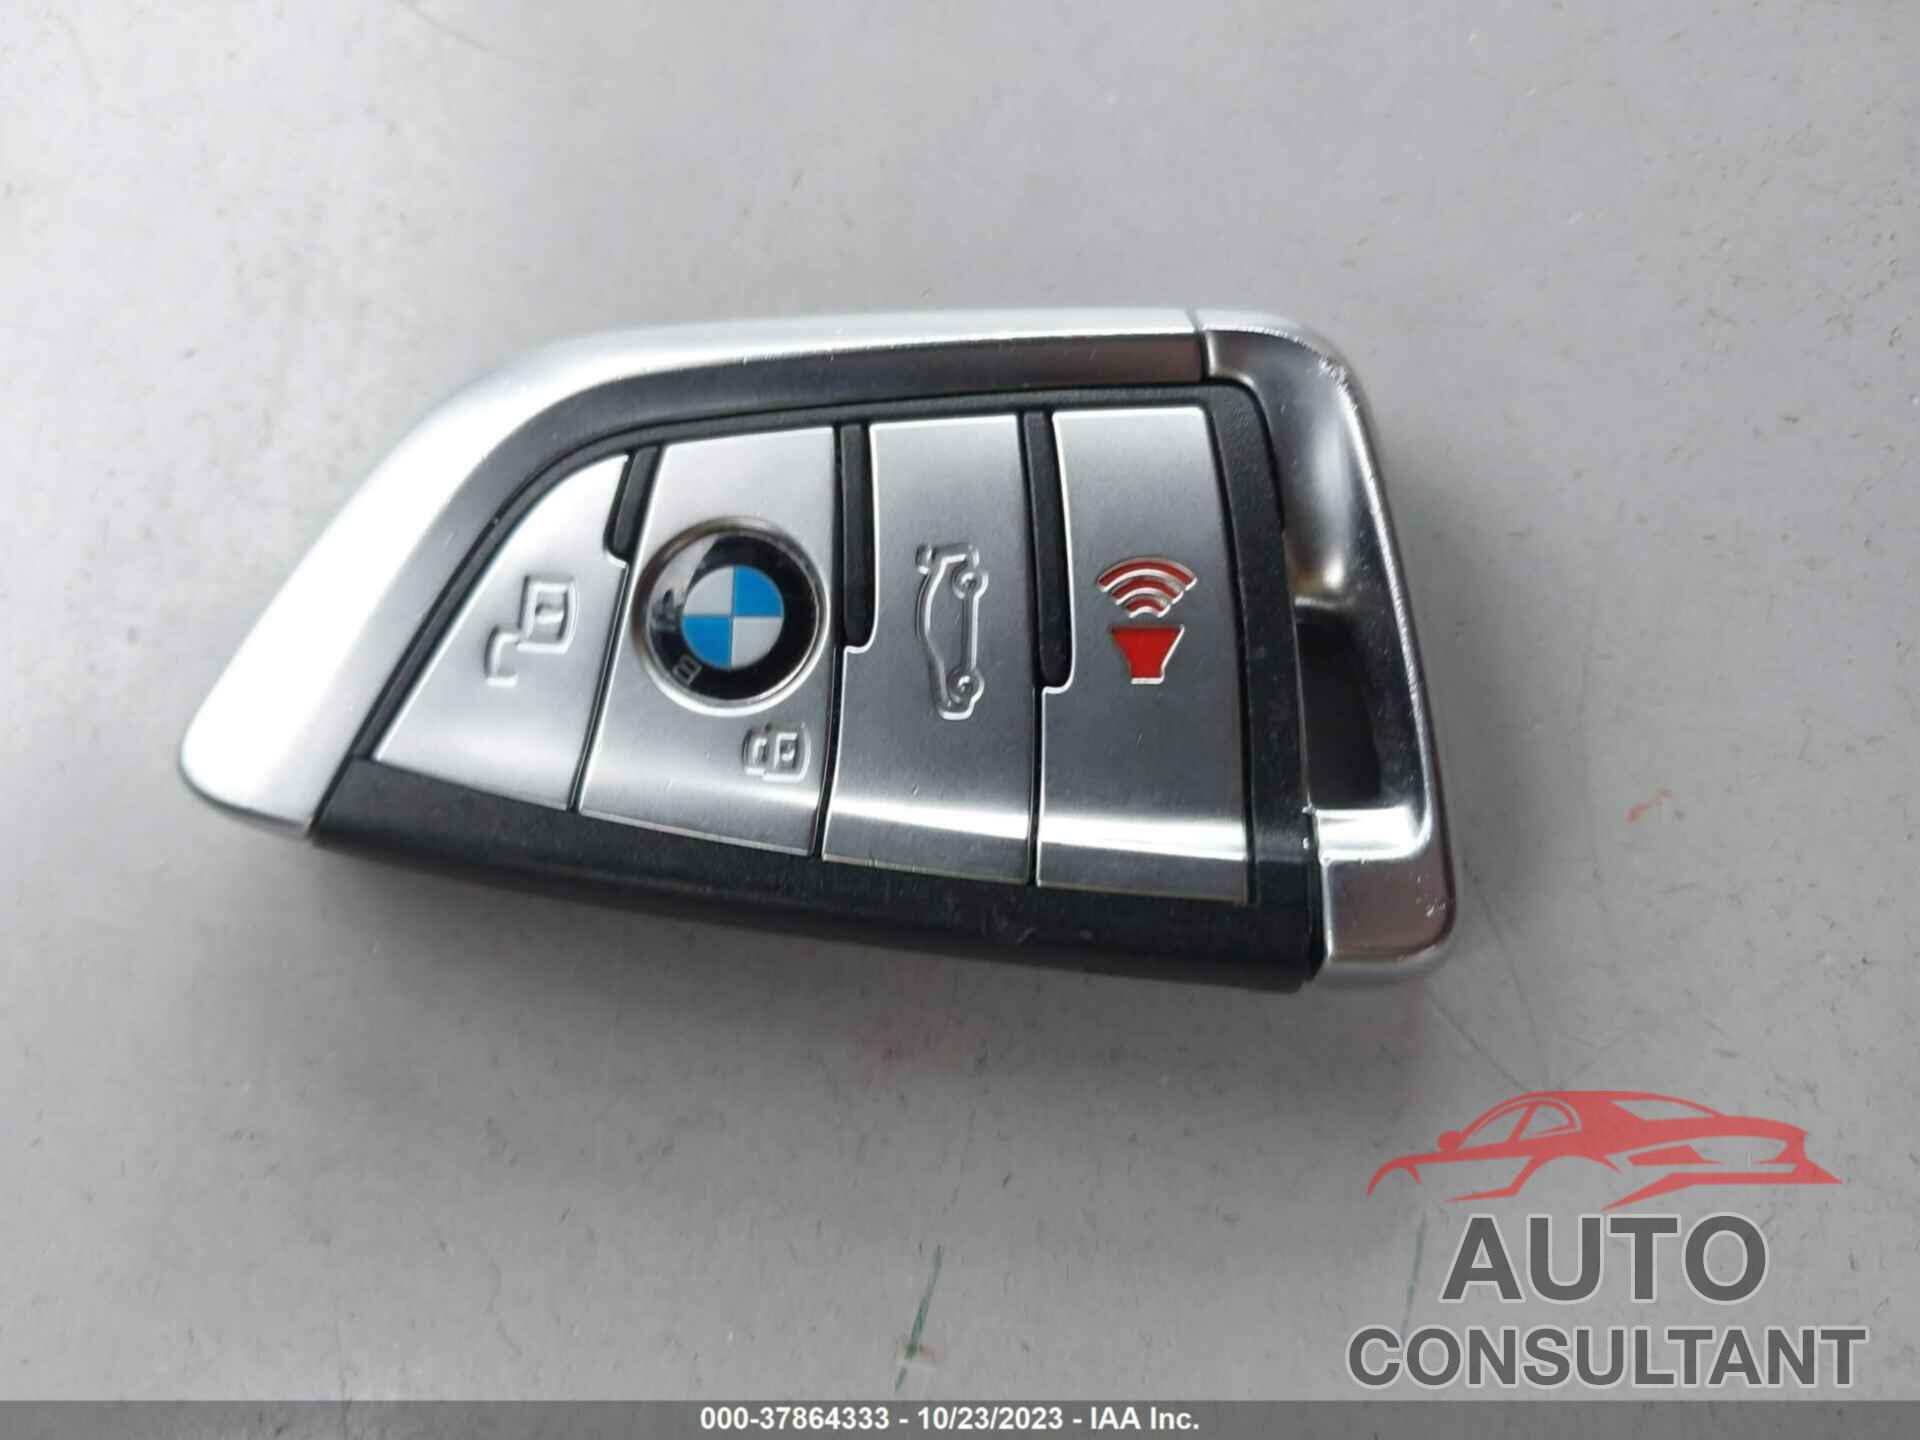 BMW X5 2020 - 5UXCR6C0XL9D03970